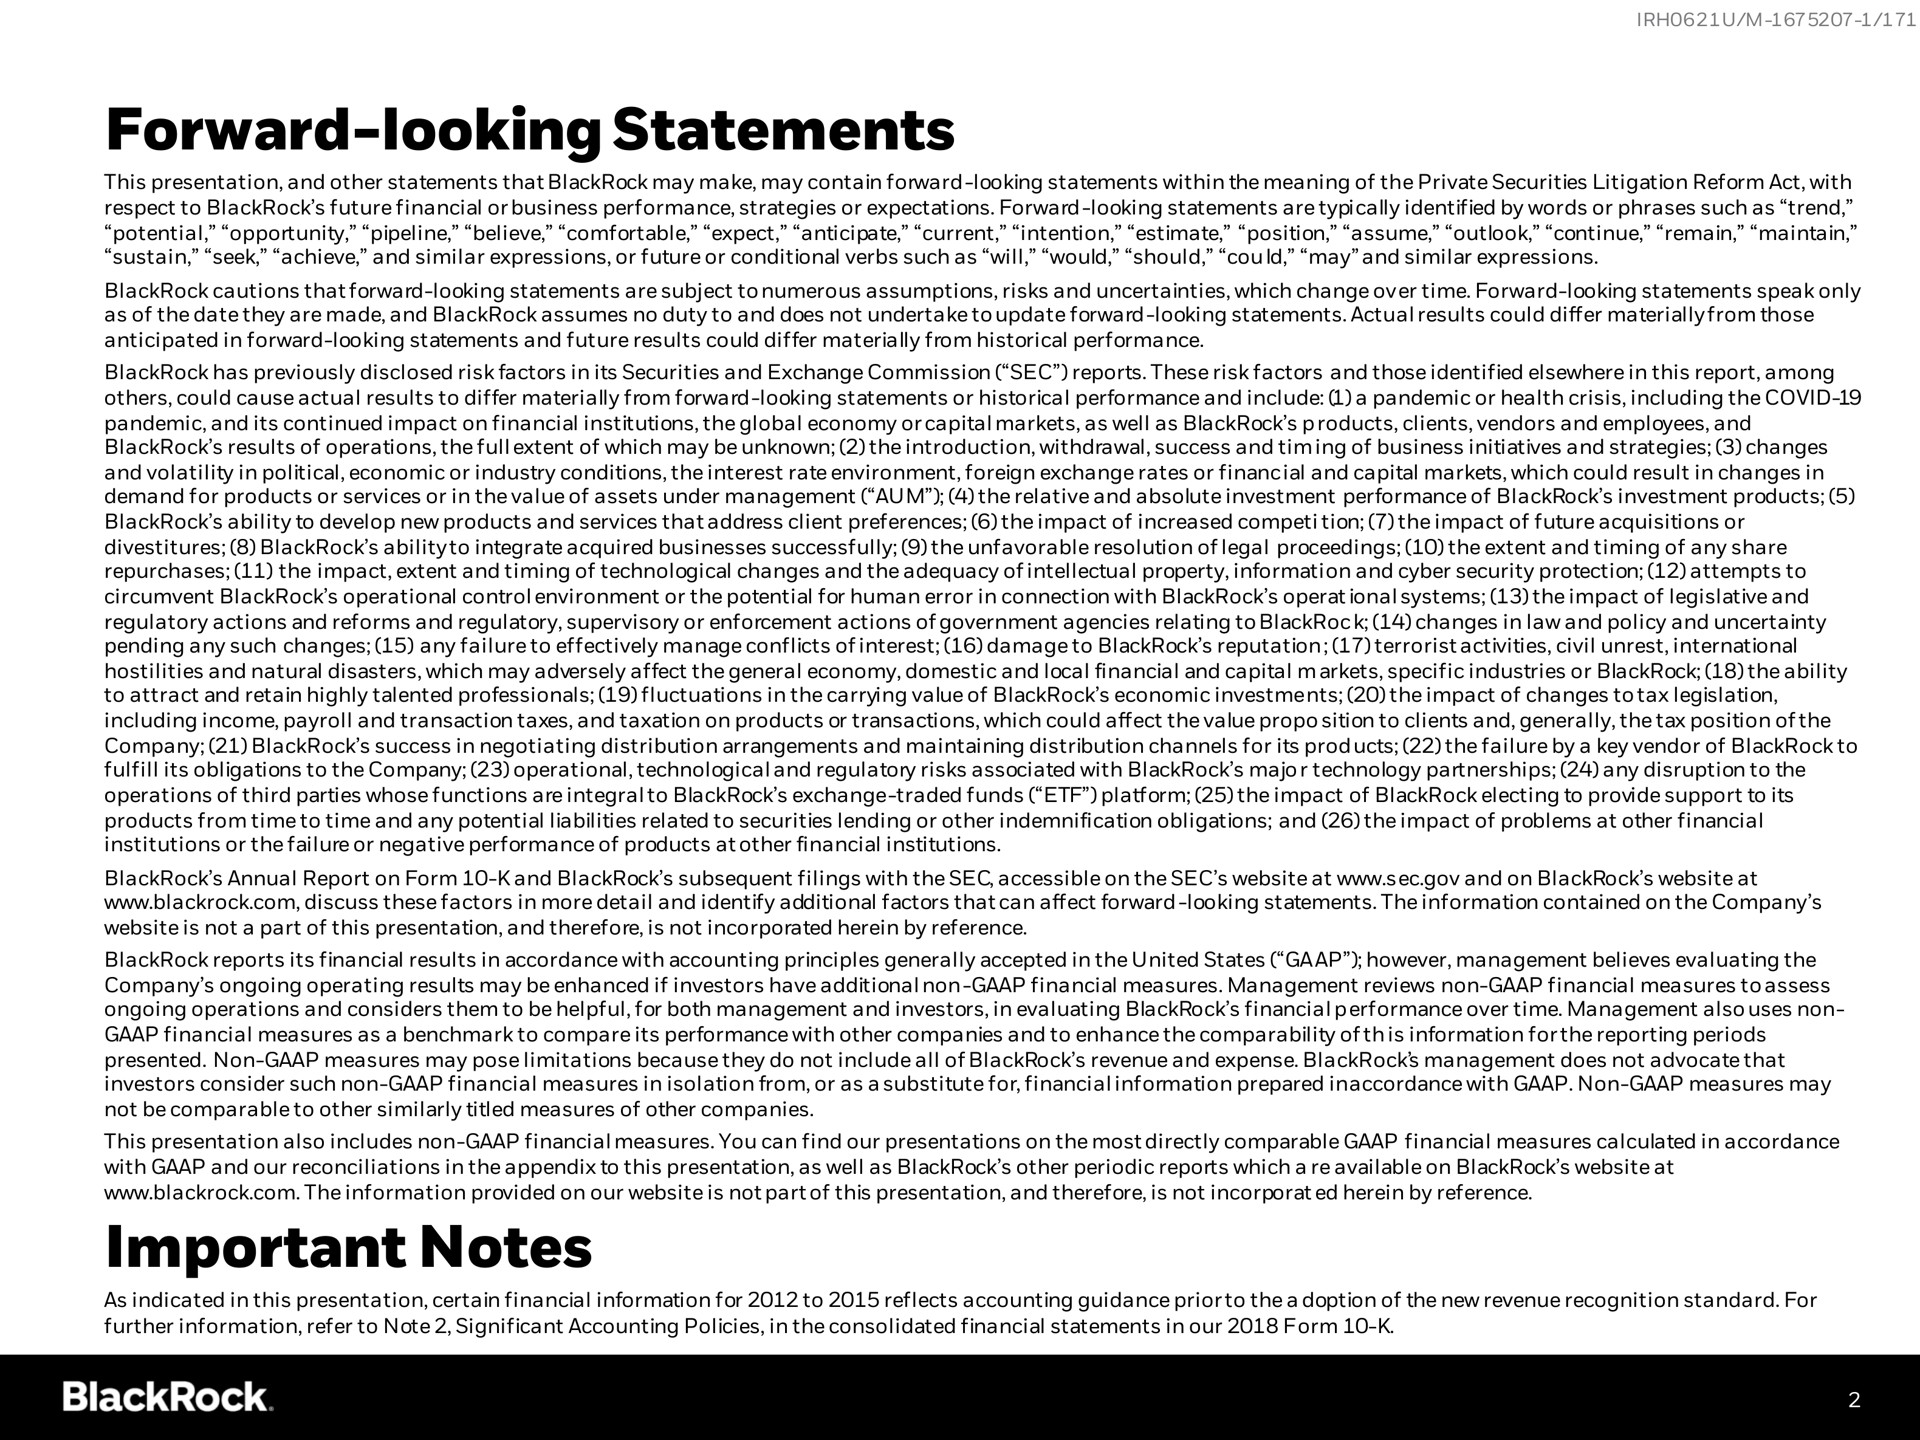 forward looking statements important notes | BlackRock